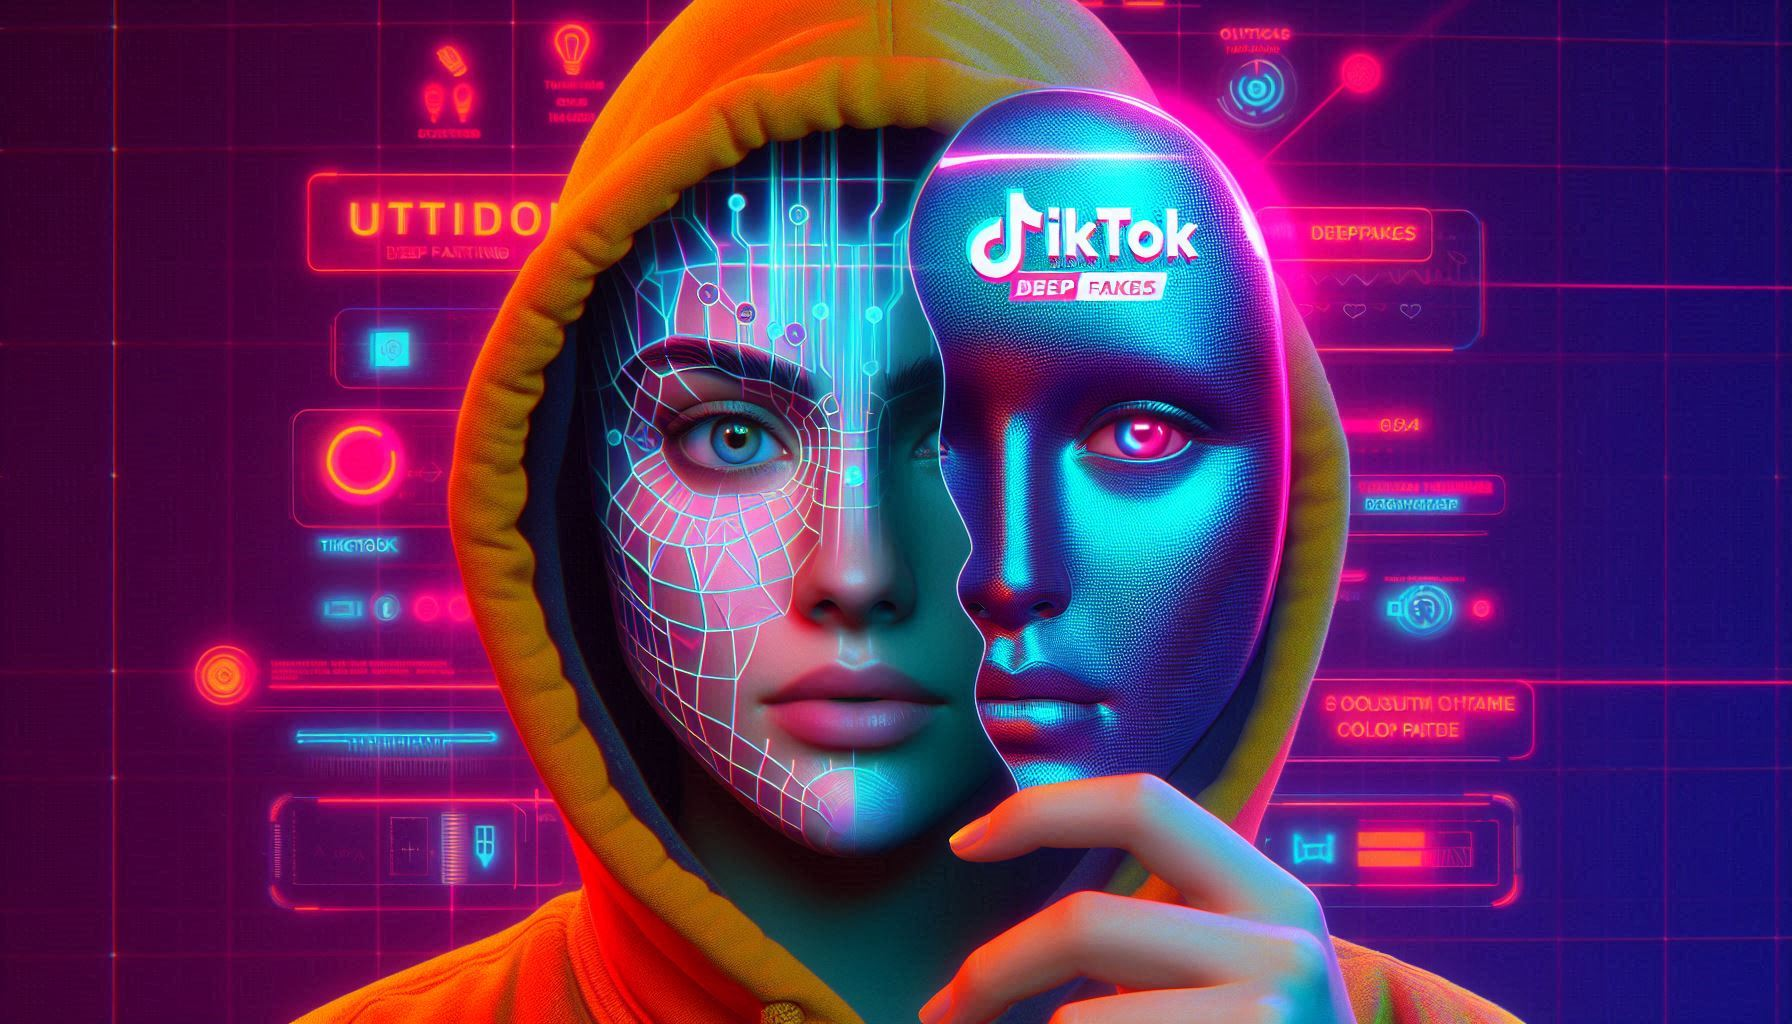 Image symbole d'un Deepfake avec le logo Tiktok